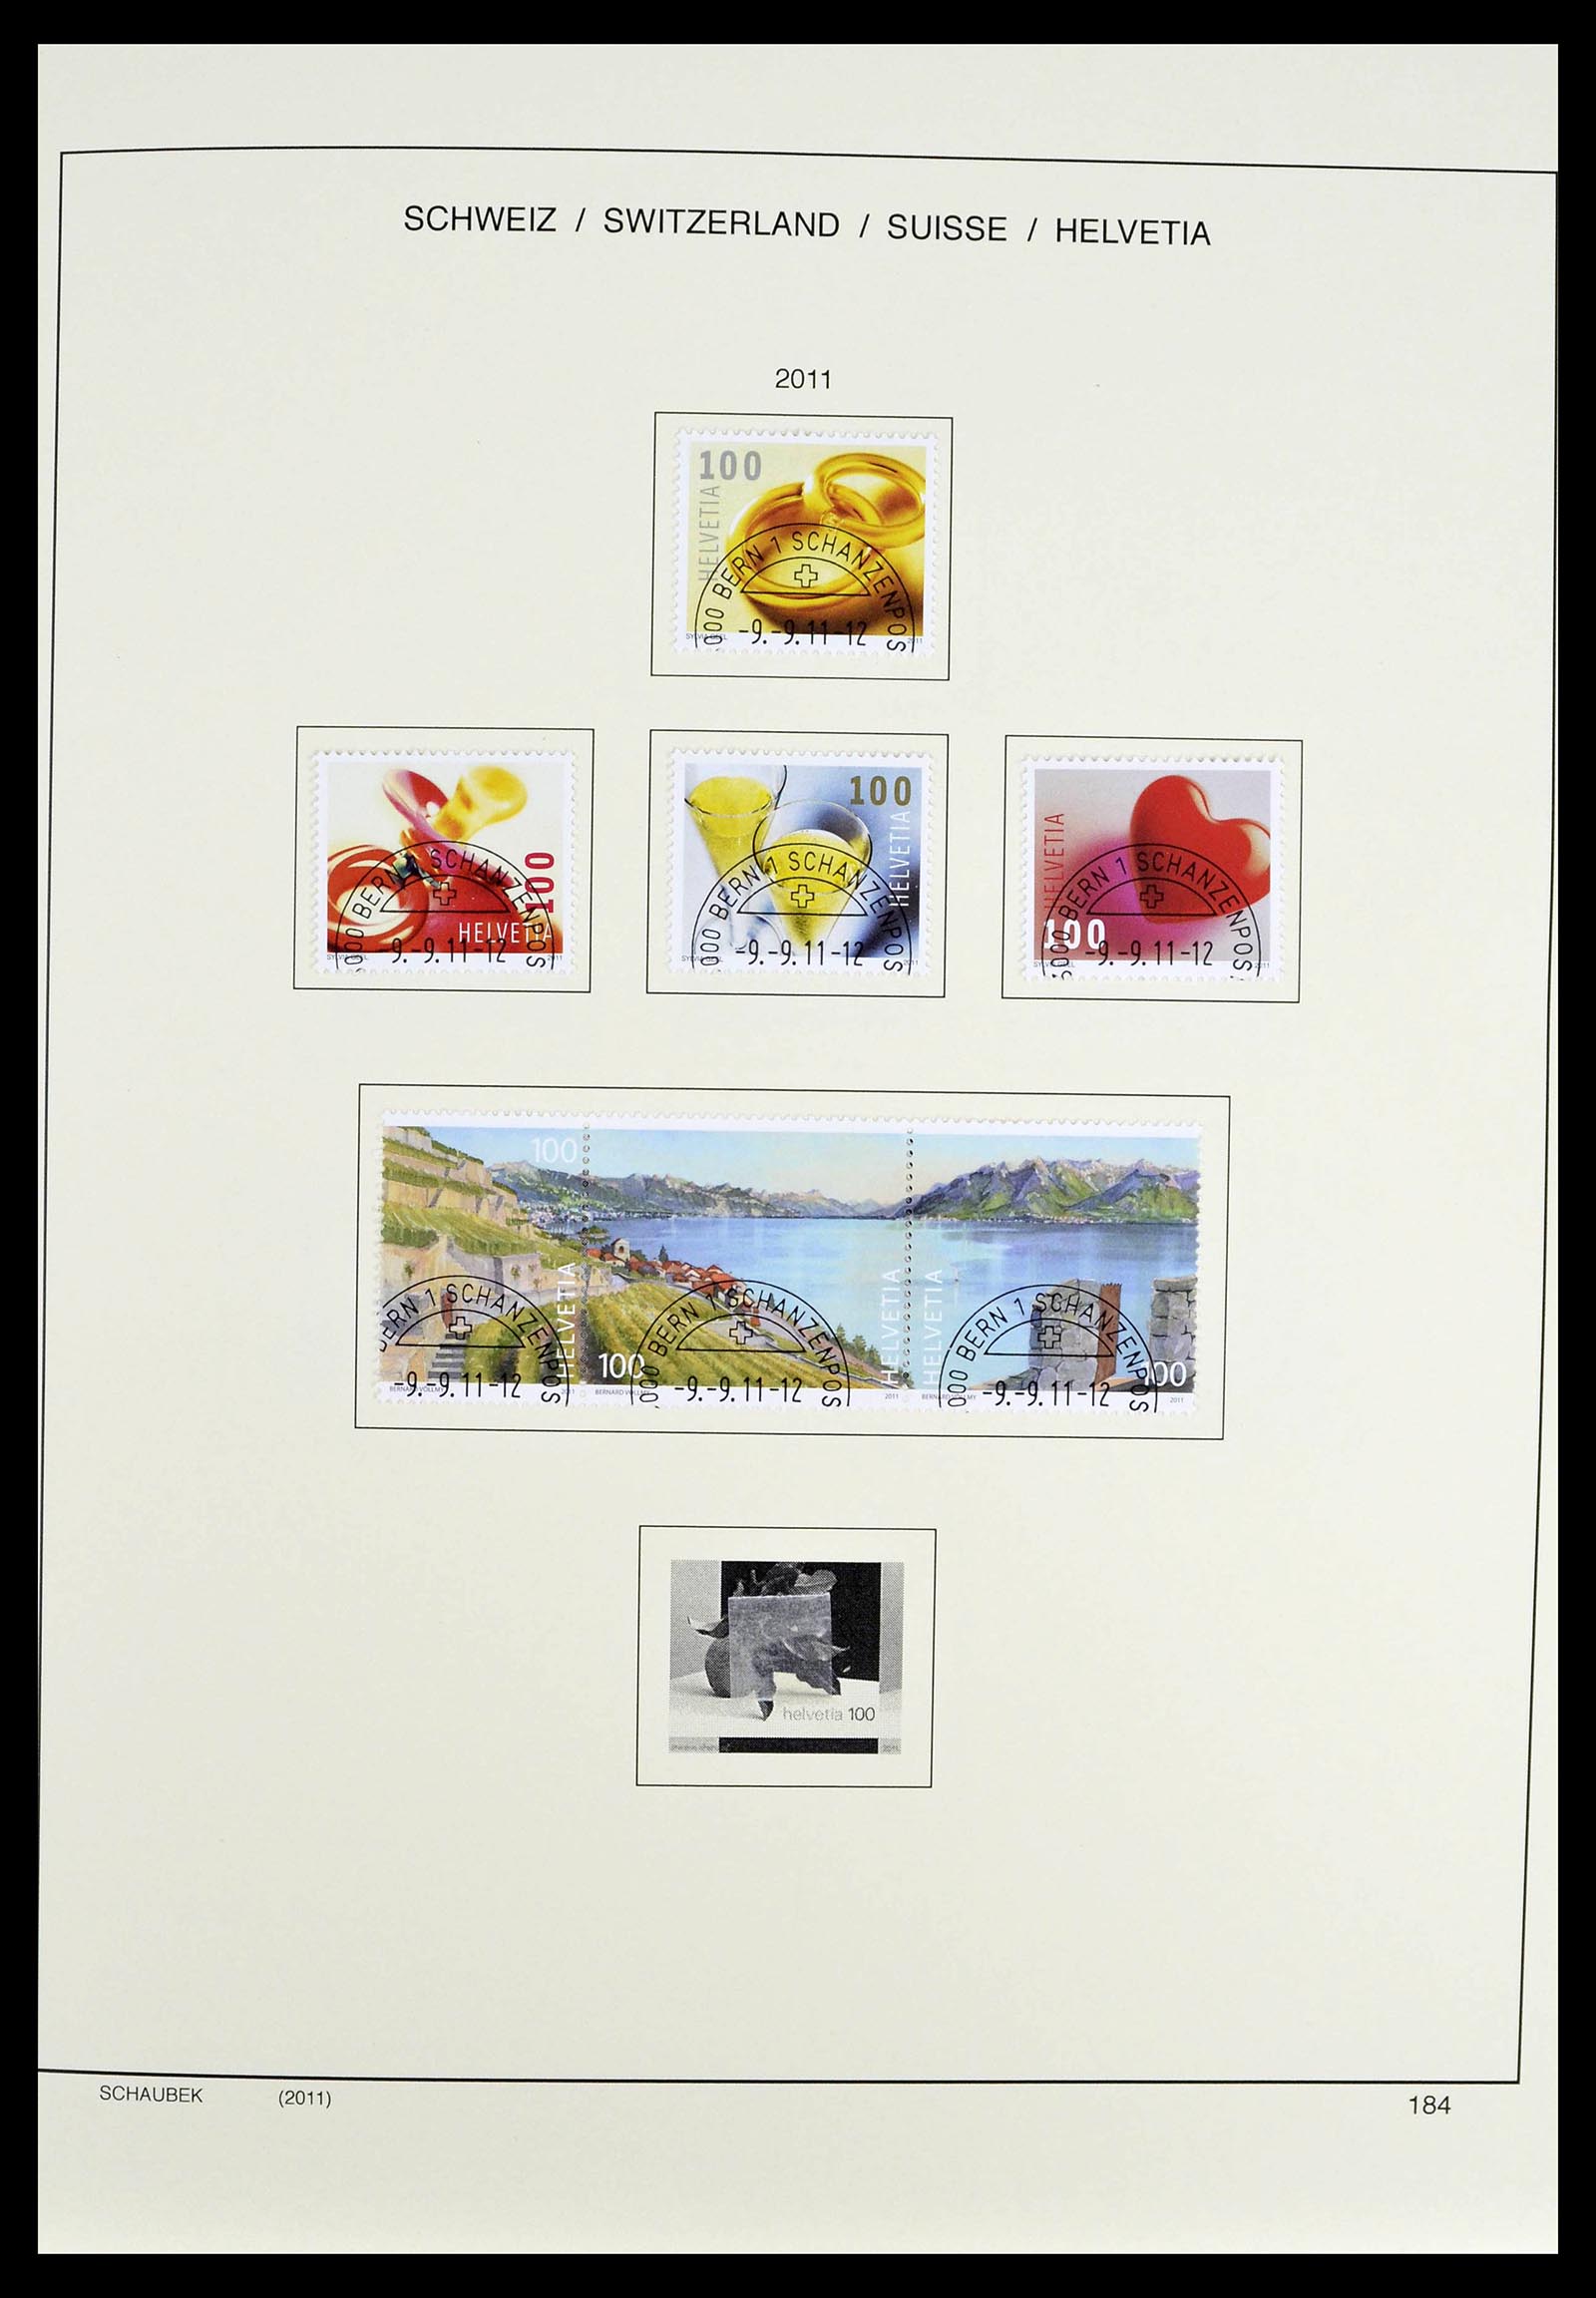 39322 0124 - Stamp collection 39322 Switzerland 1980-2011.